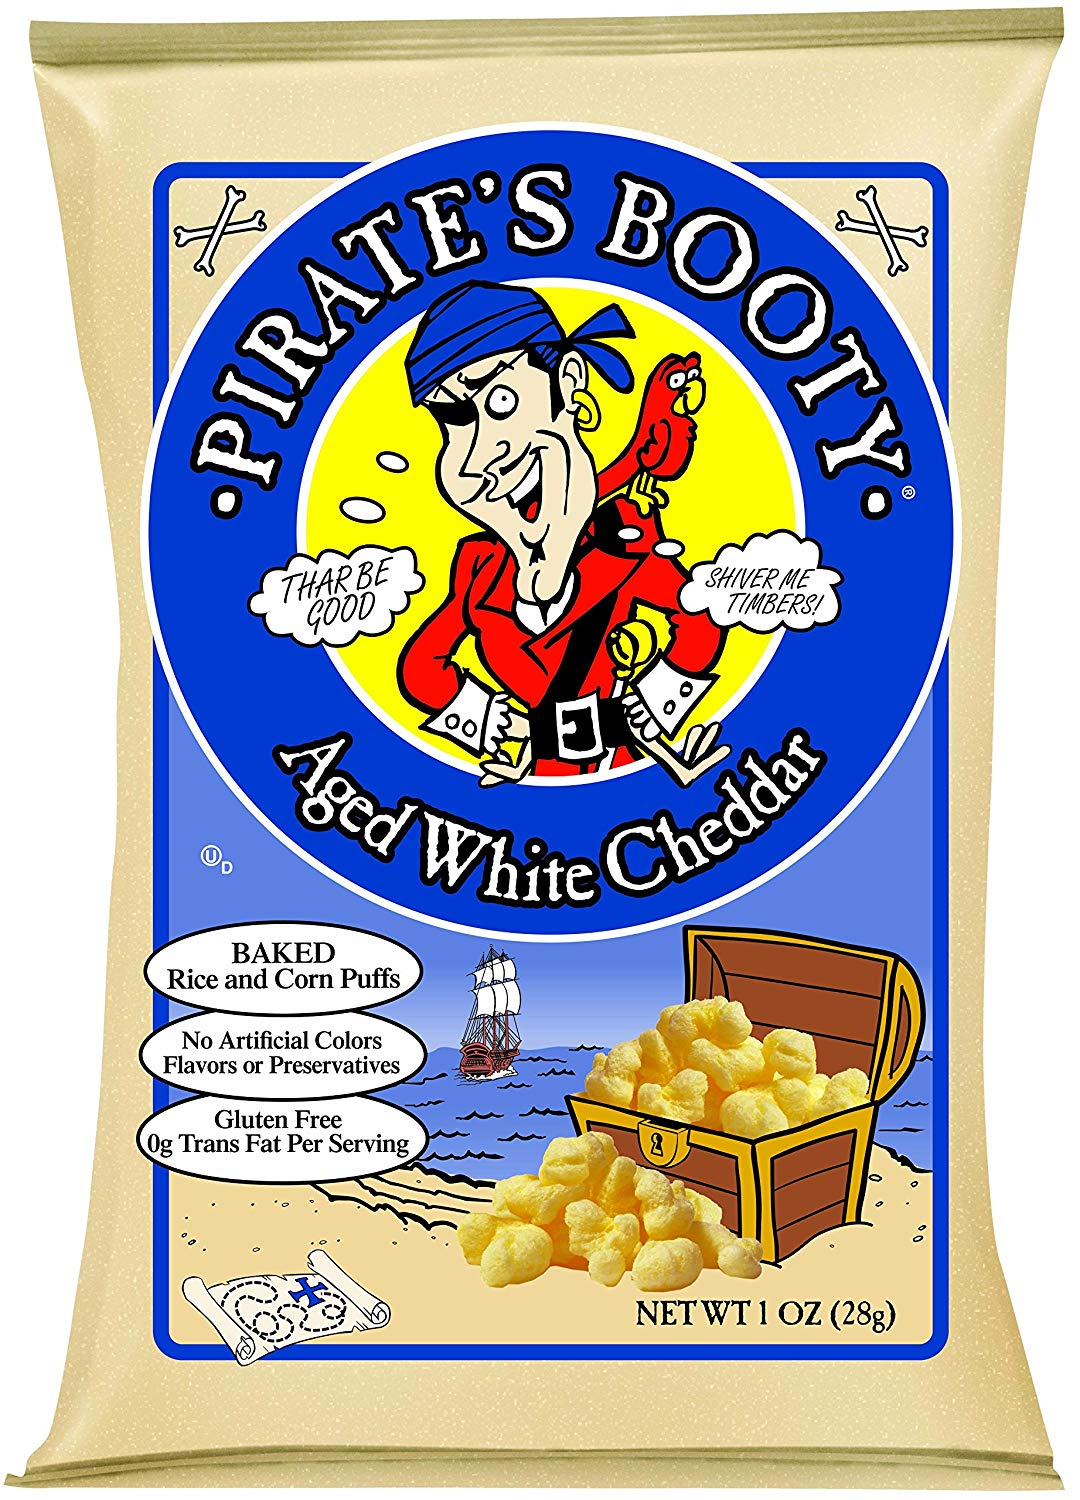 Pirates Booty snacks, Hershey